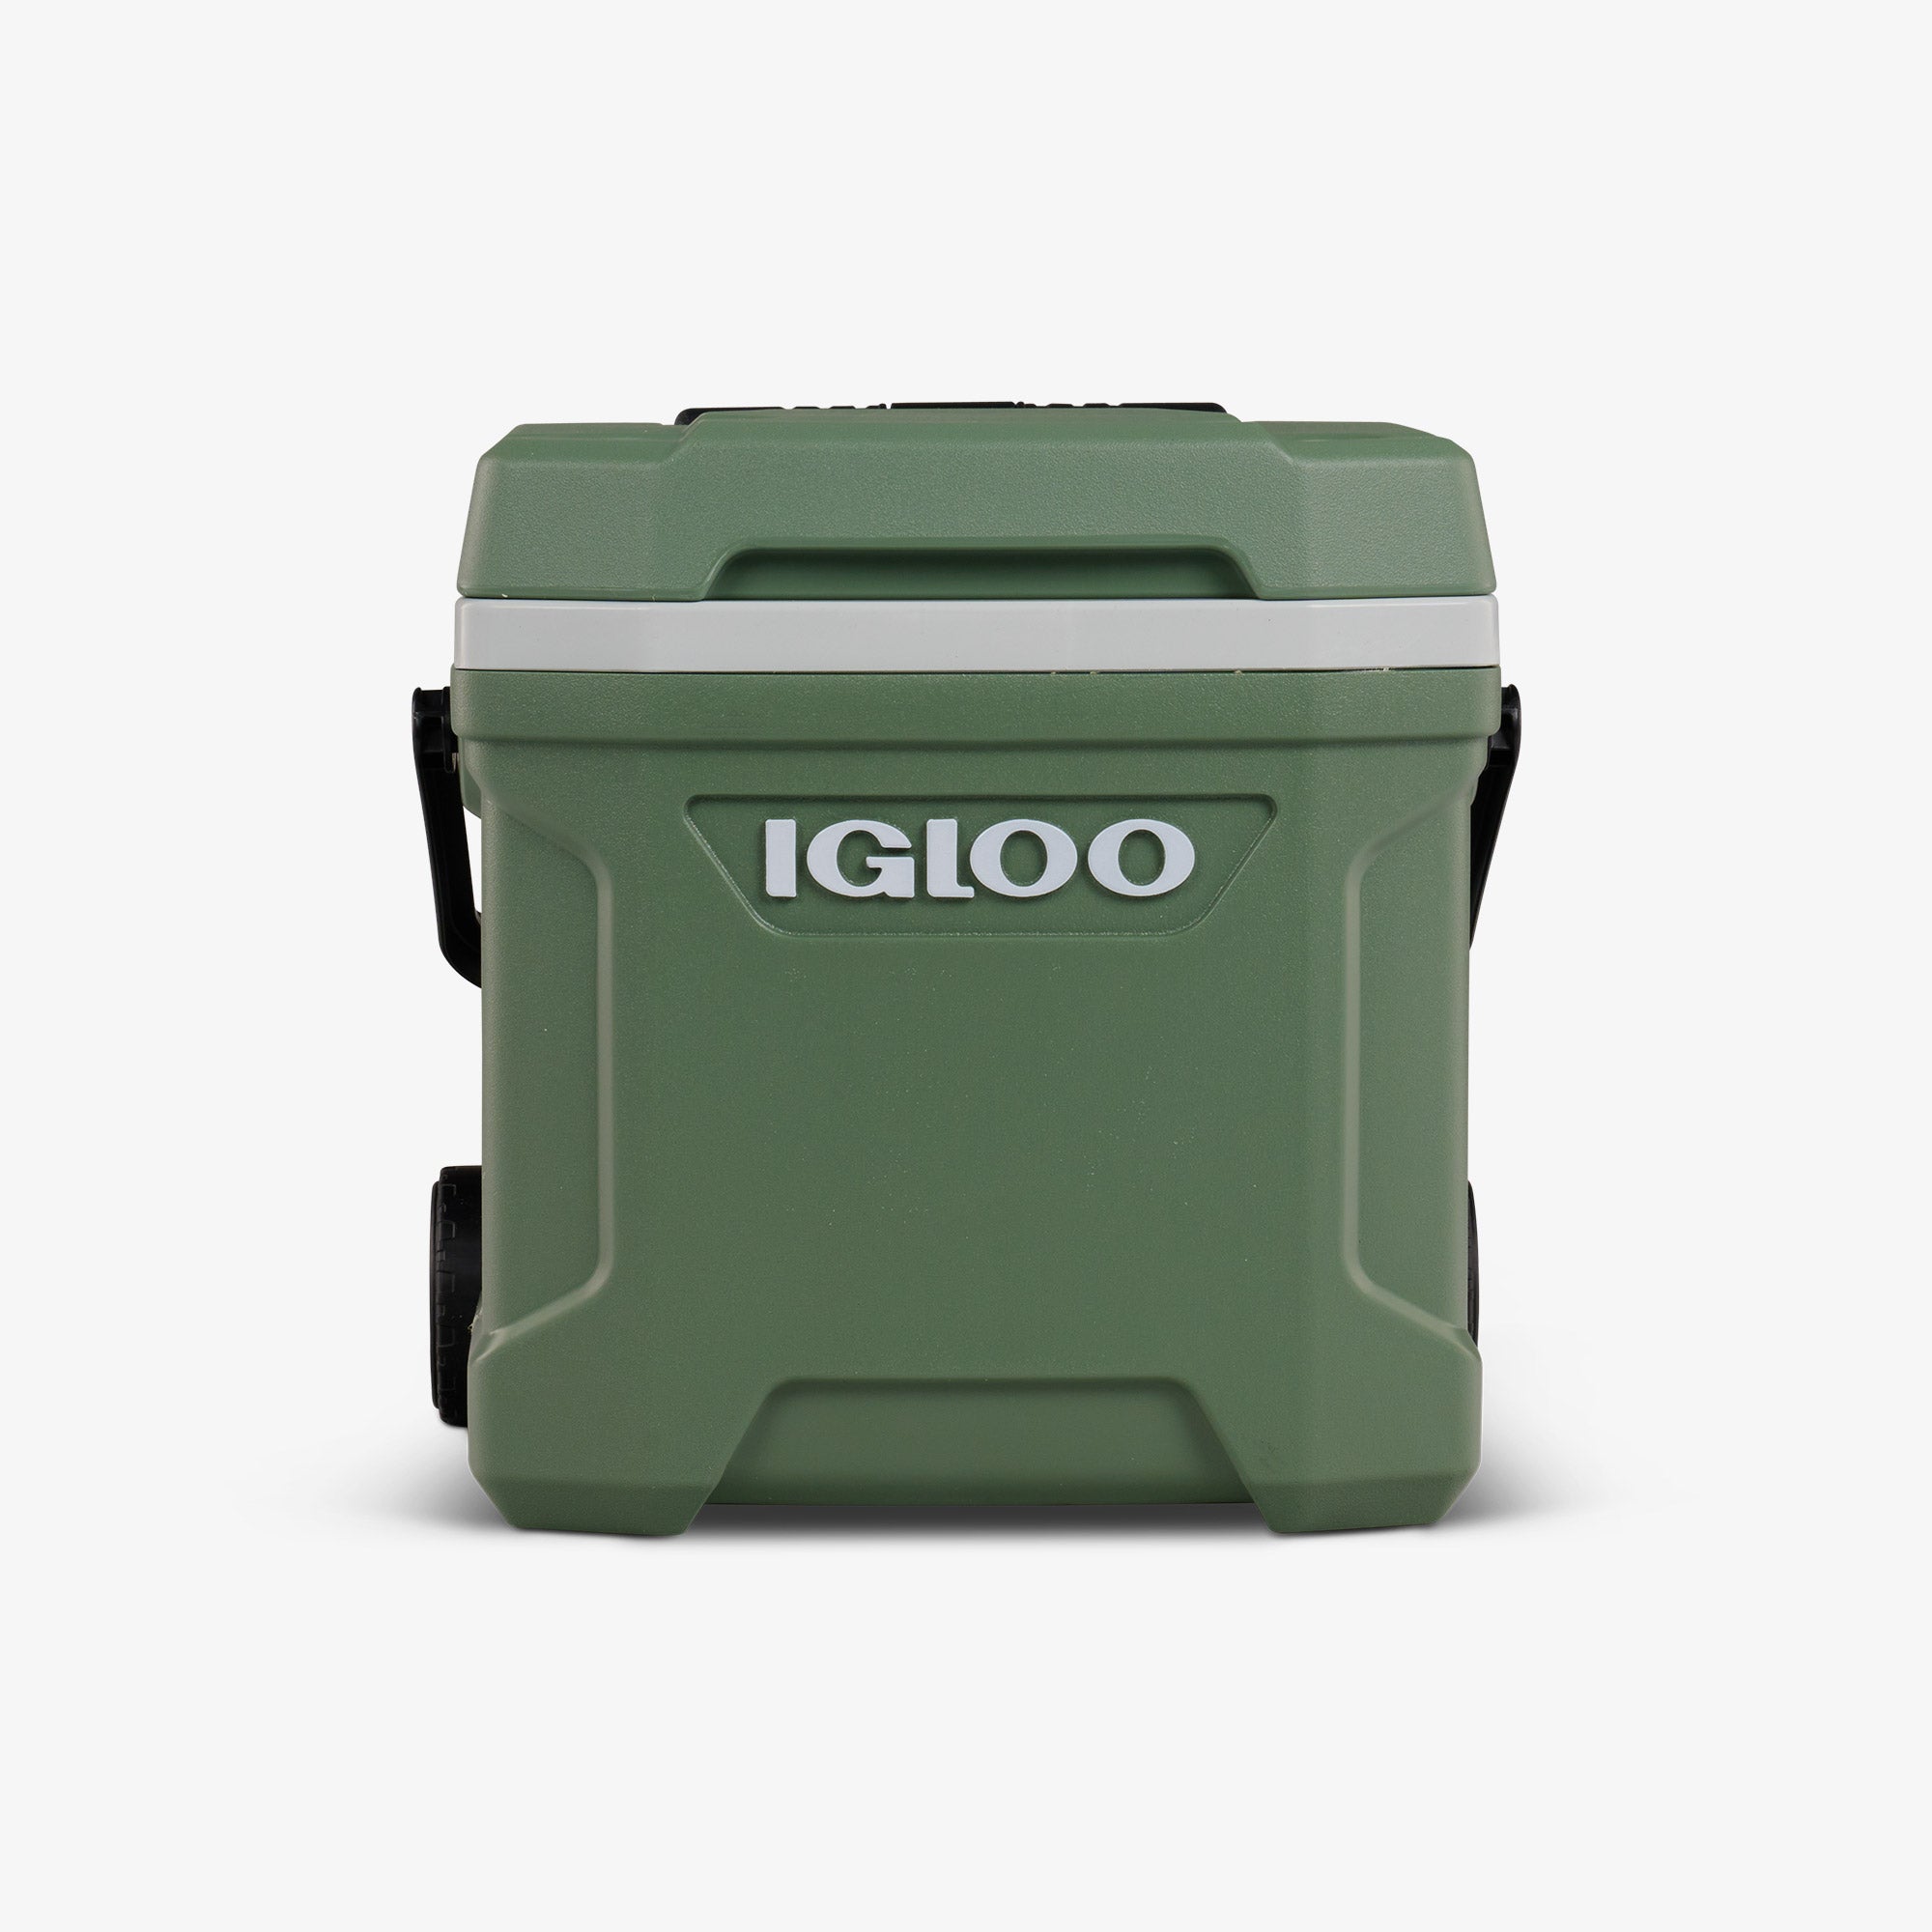 Igloo® | Making Coolers Since 1947